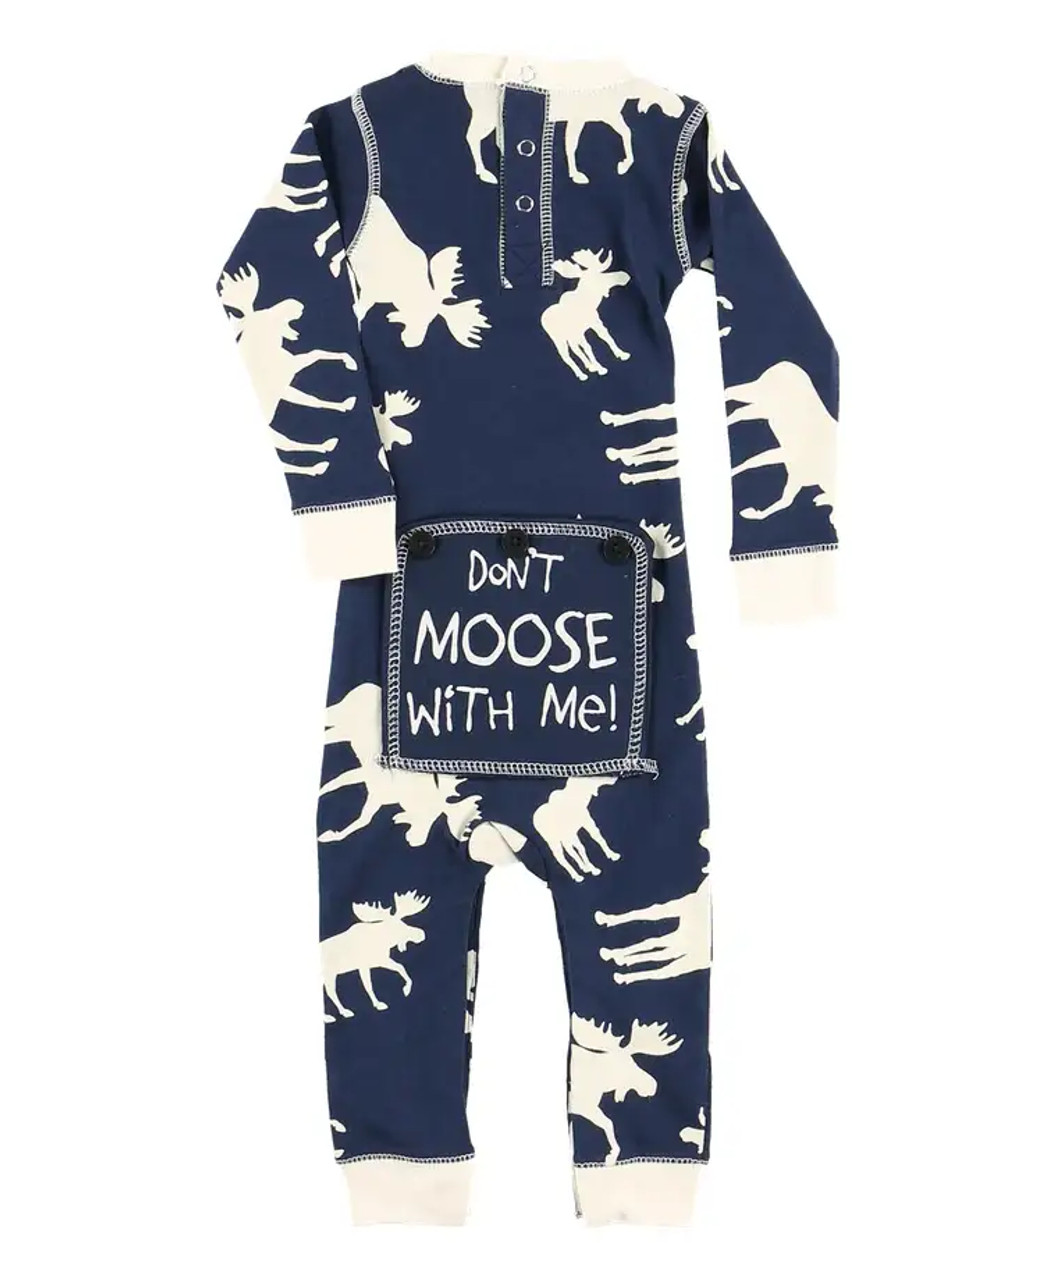 Men's Moose Plaid Pajama Shorts - Adirondack Country Store